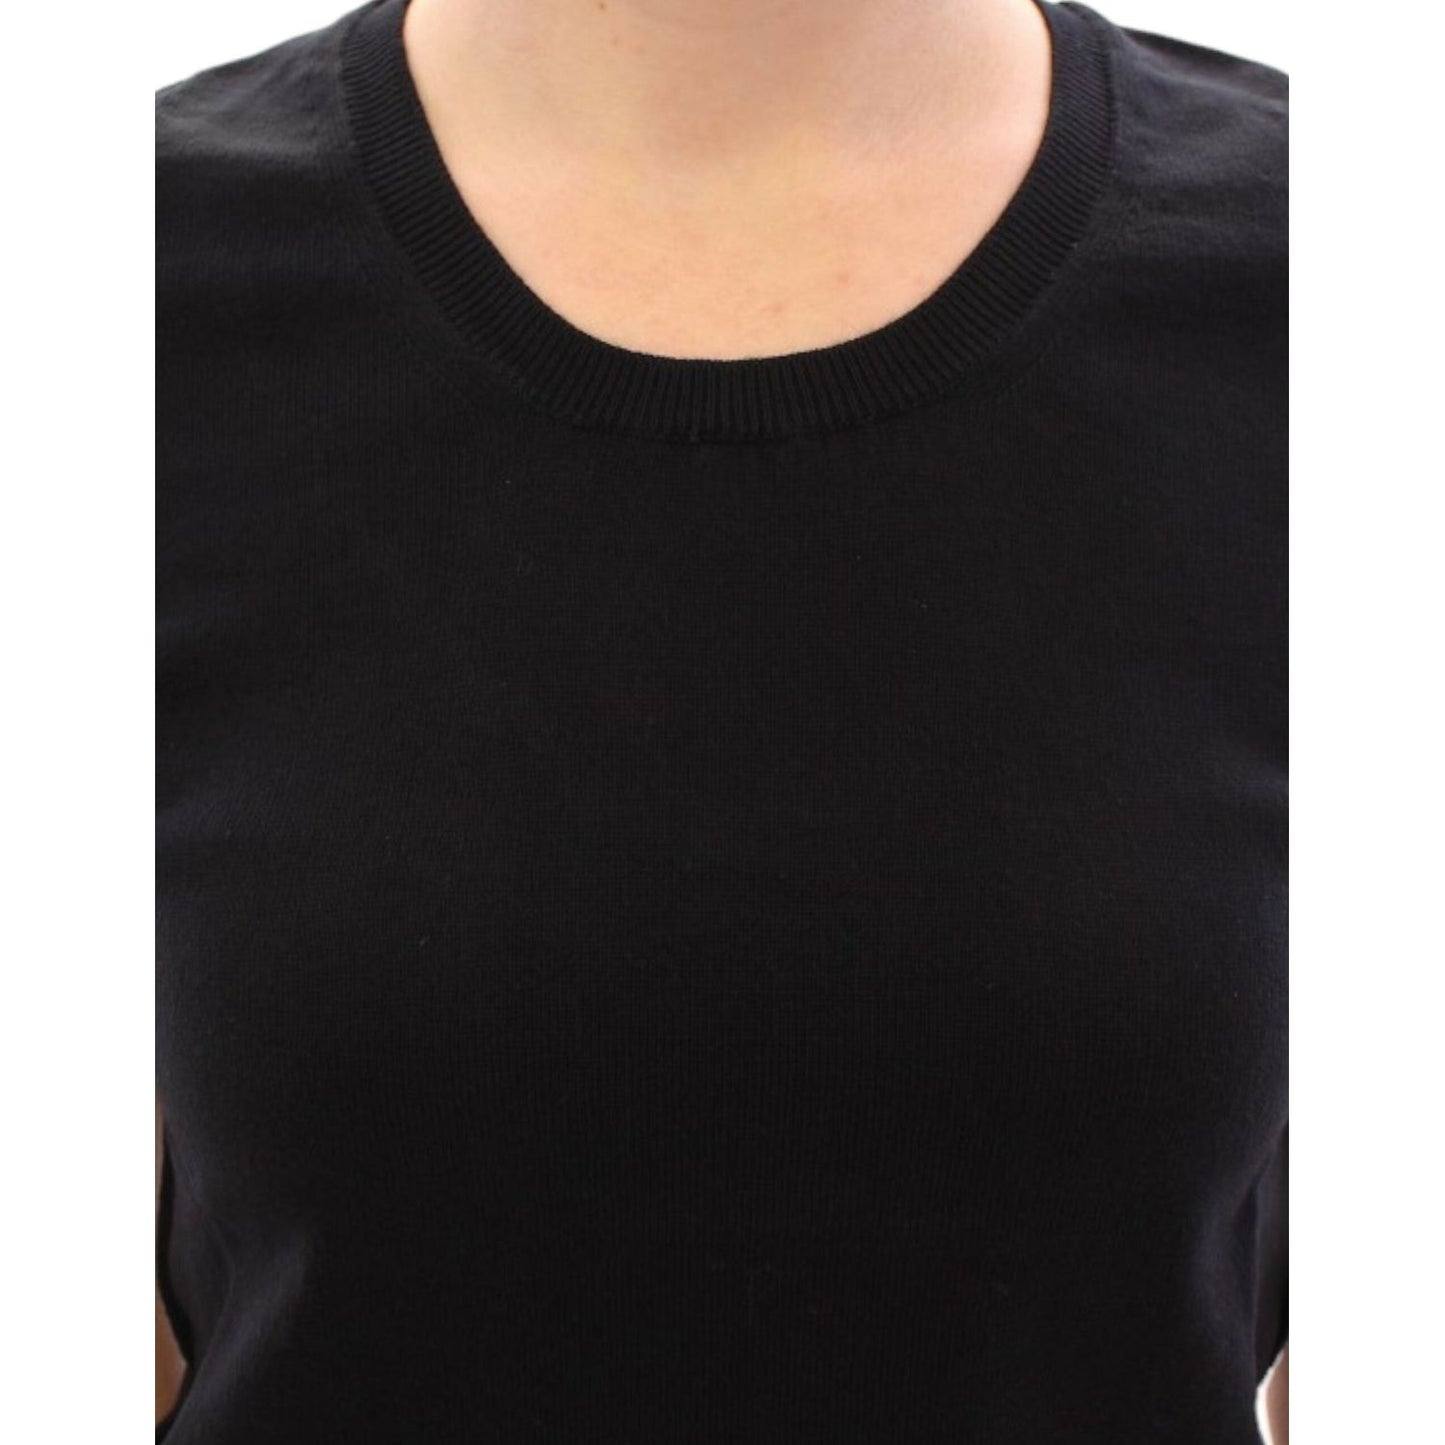 Dolce & Gabbana Black crewneck cotton t-shirt black-crewneck-cotton-t-shirt 27263-black-crewneck-cotton-t-shirt-3-3-scaled-6cf24450-fd0.jpg